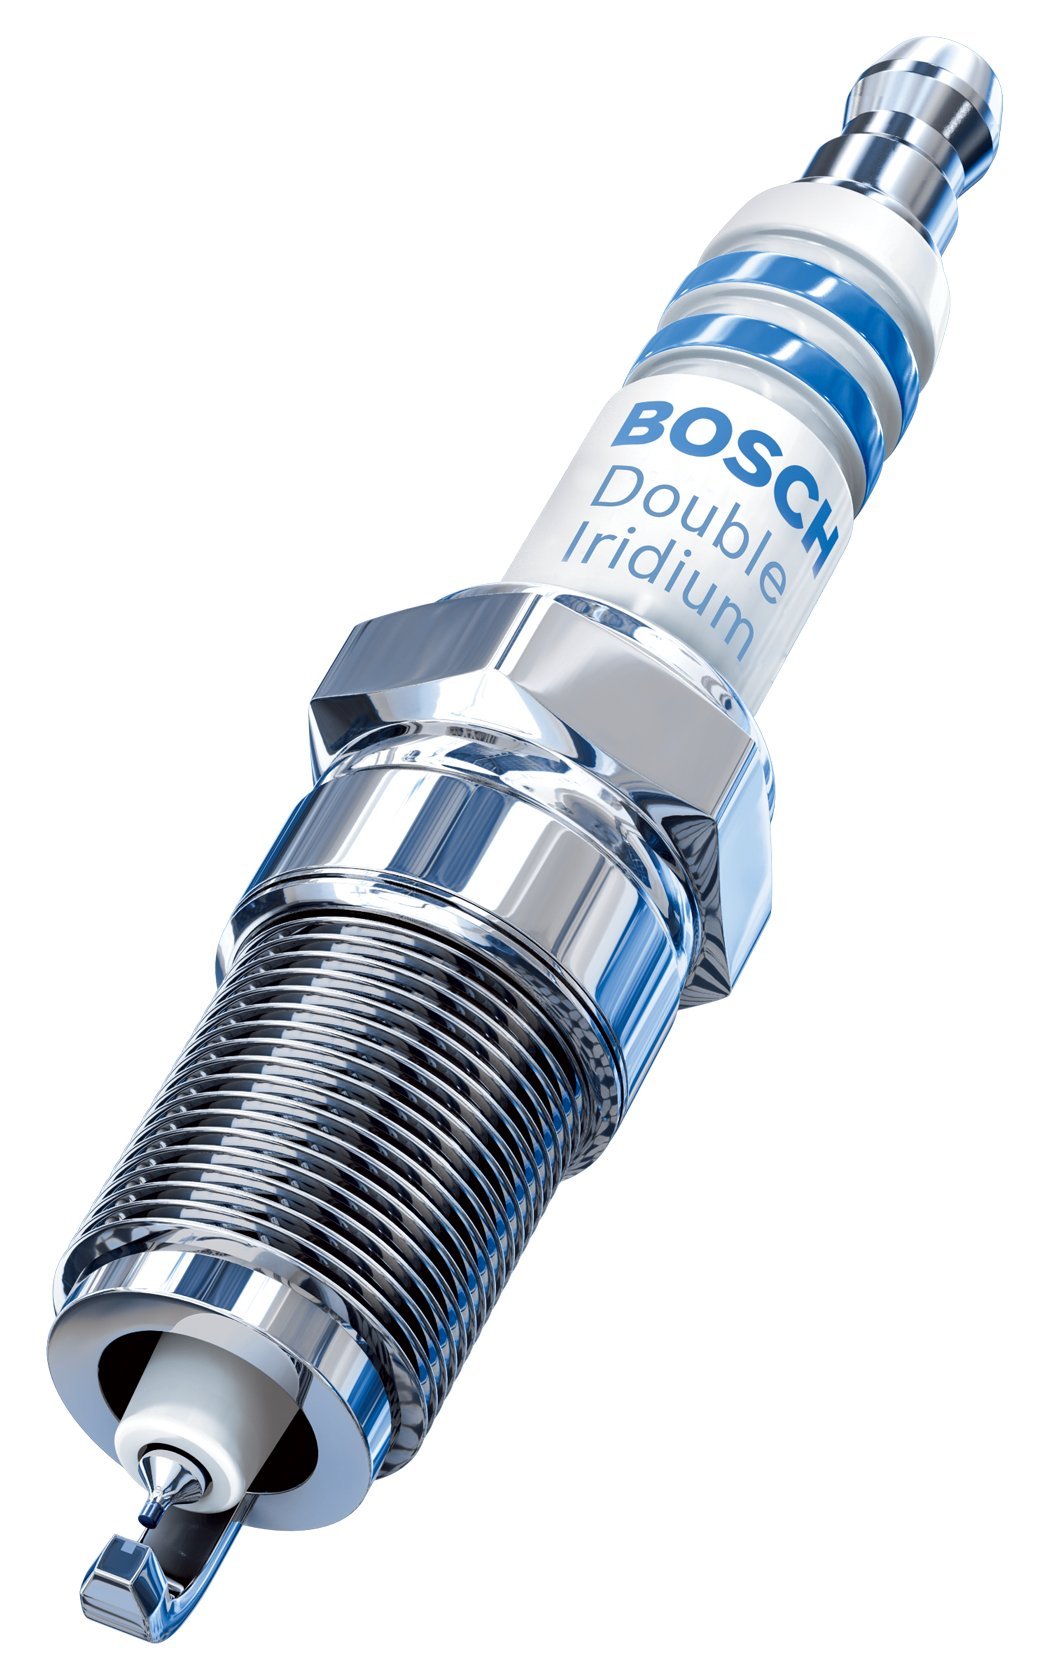 Bosch 9603 OE Zündkerze mit feinem Draht, Doppel-Iridium, 4 Stück von Bosch Automotive